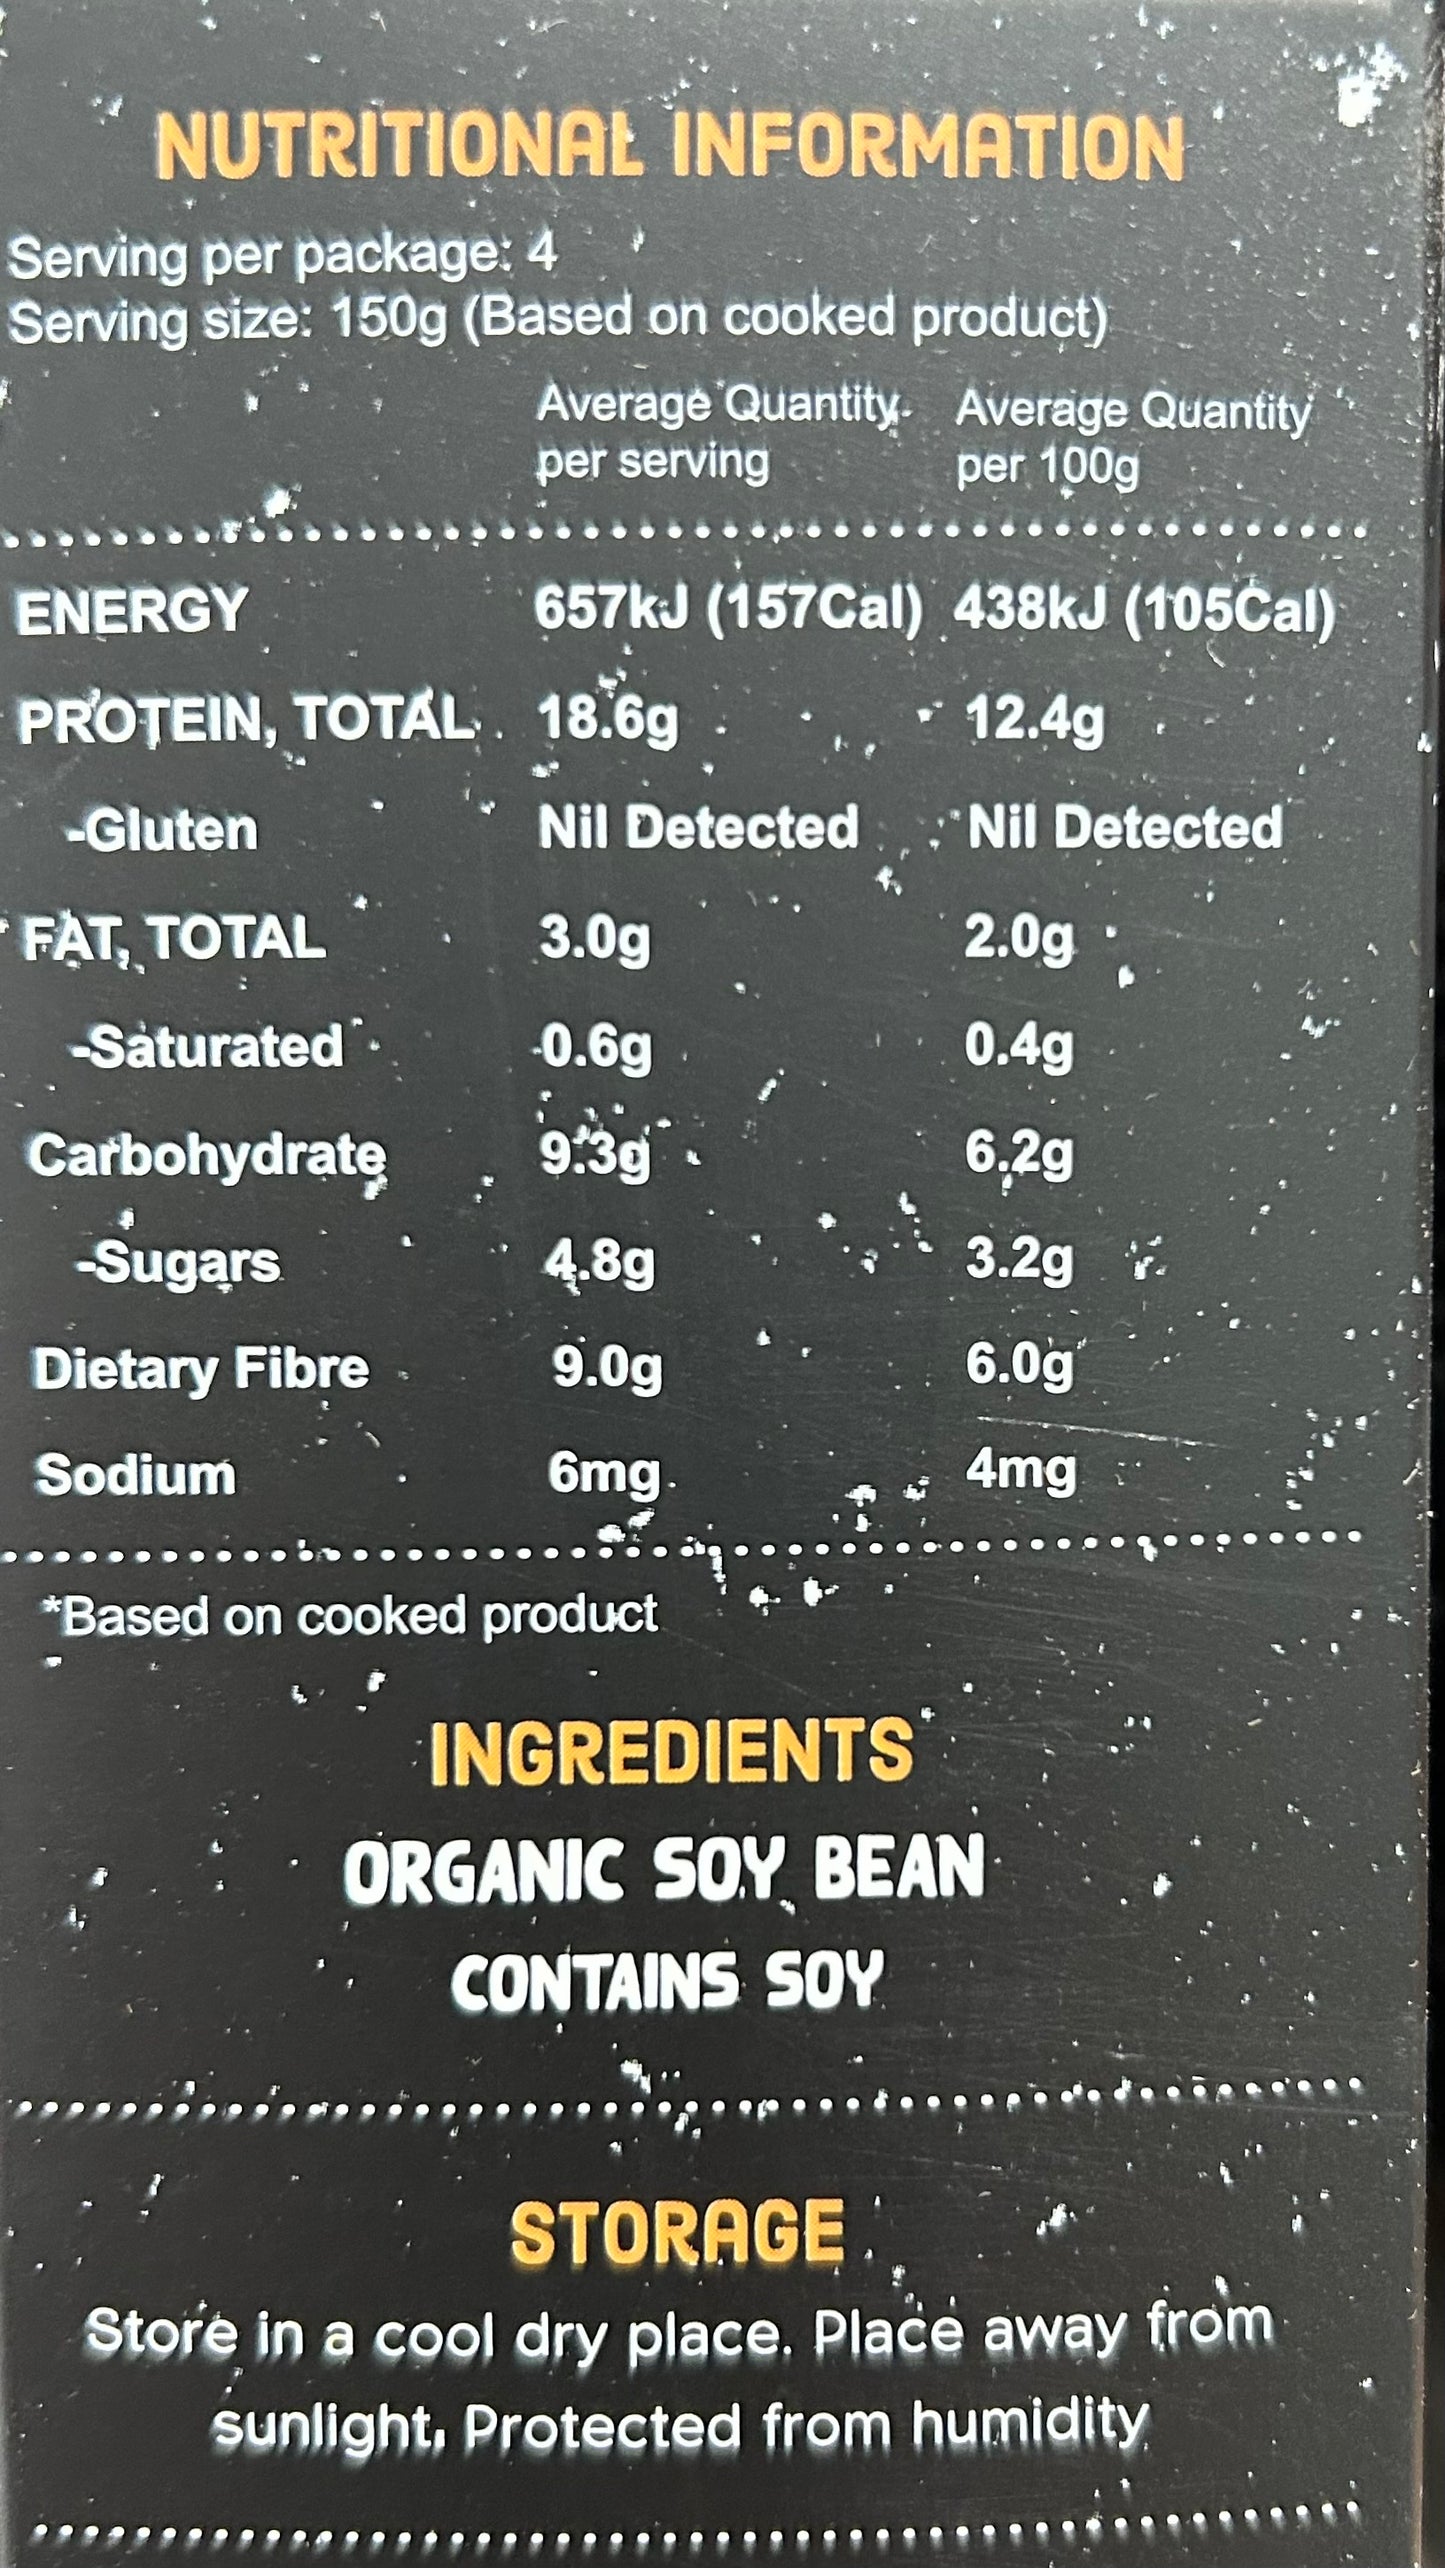 Qetoe Organic Low Carb Fettuccine - 200gm